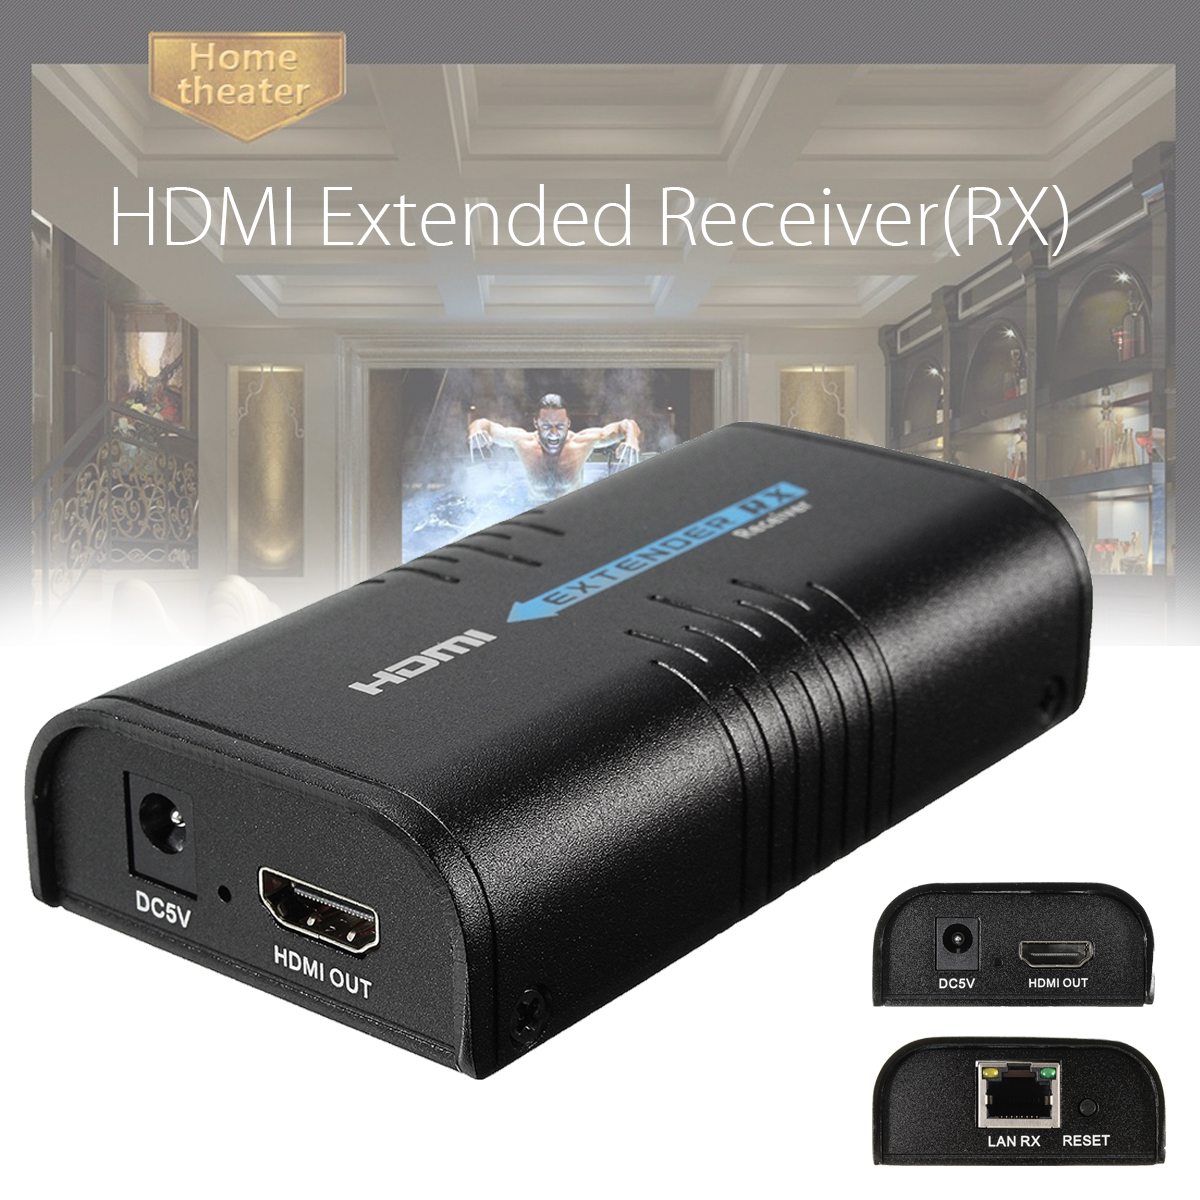 HDMI-Extender-RX-Receiver-100-120m-Support-1080P-Over-Cat5-Cat5e-Cat6-1265248-1